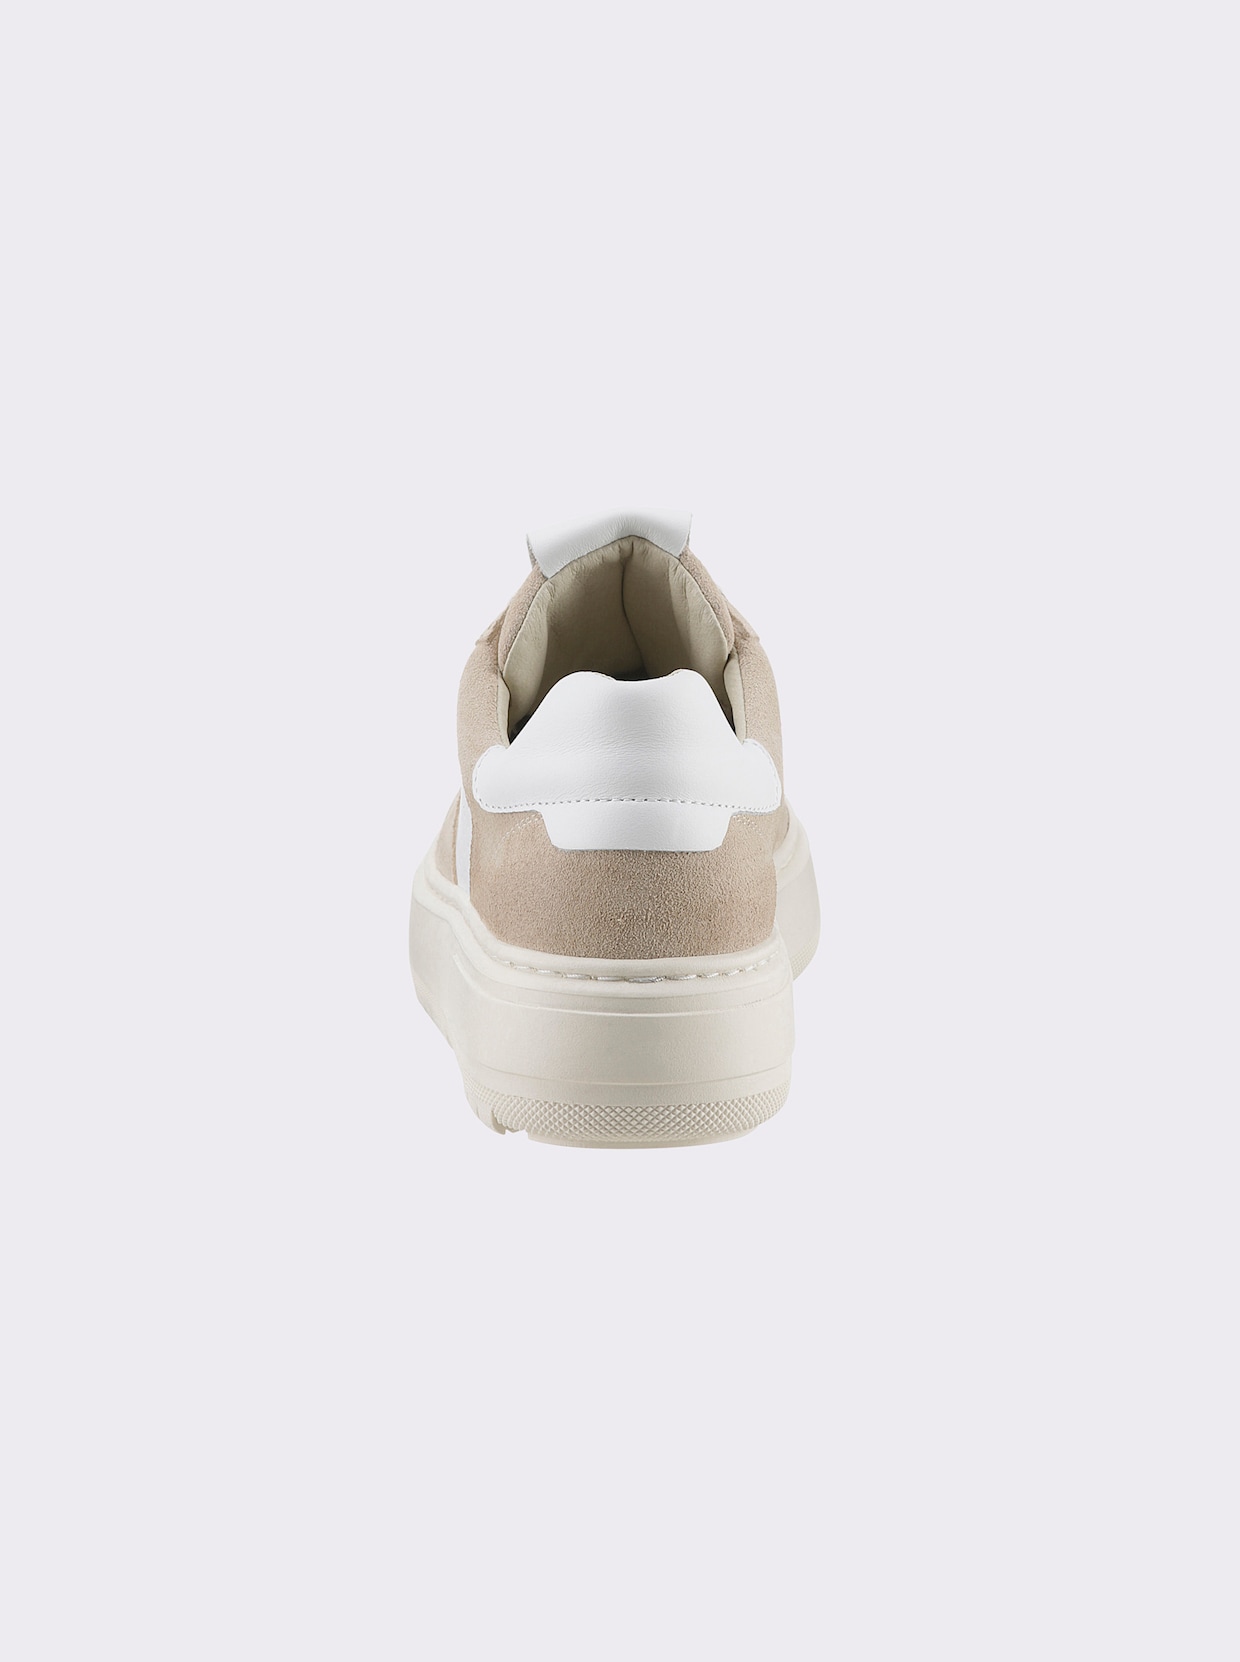 heine Sneaker - beige/wit